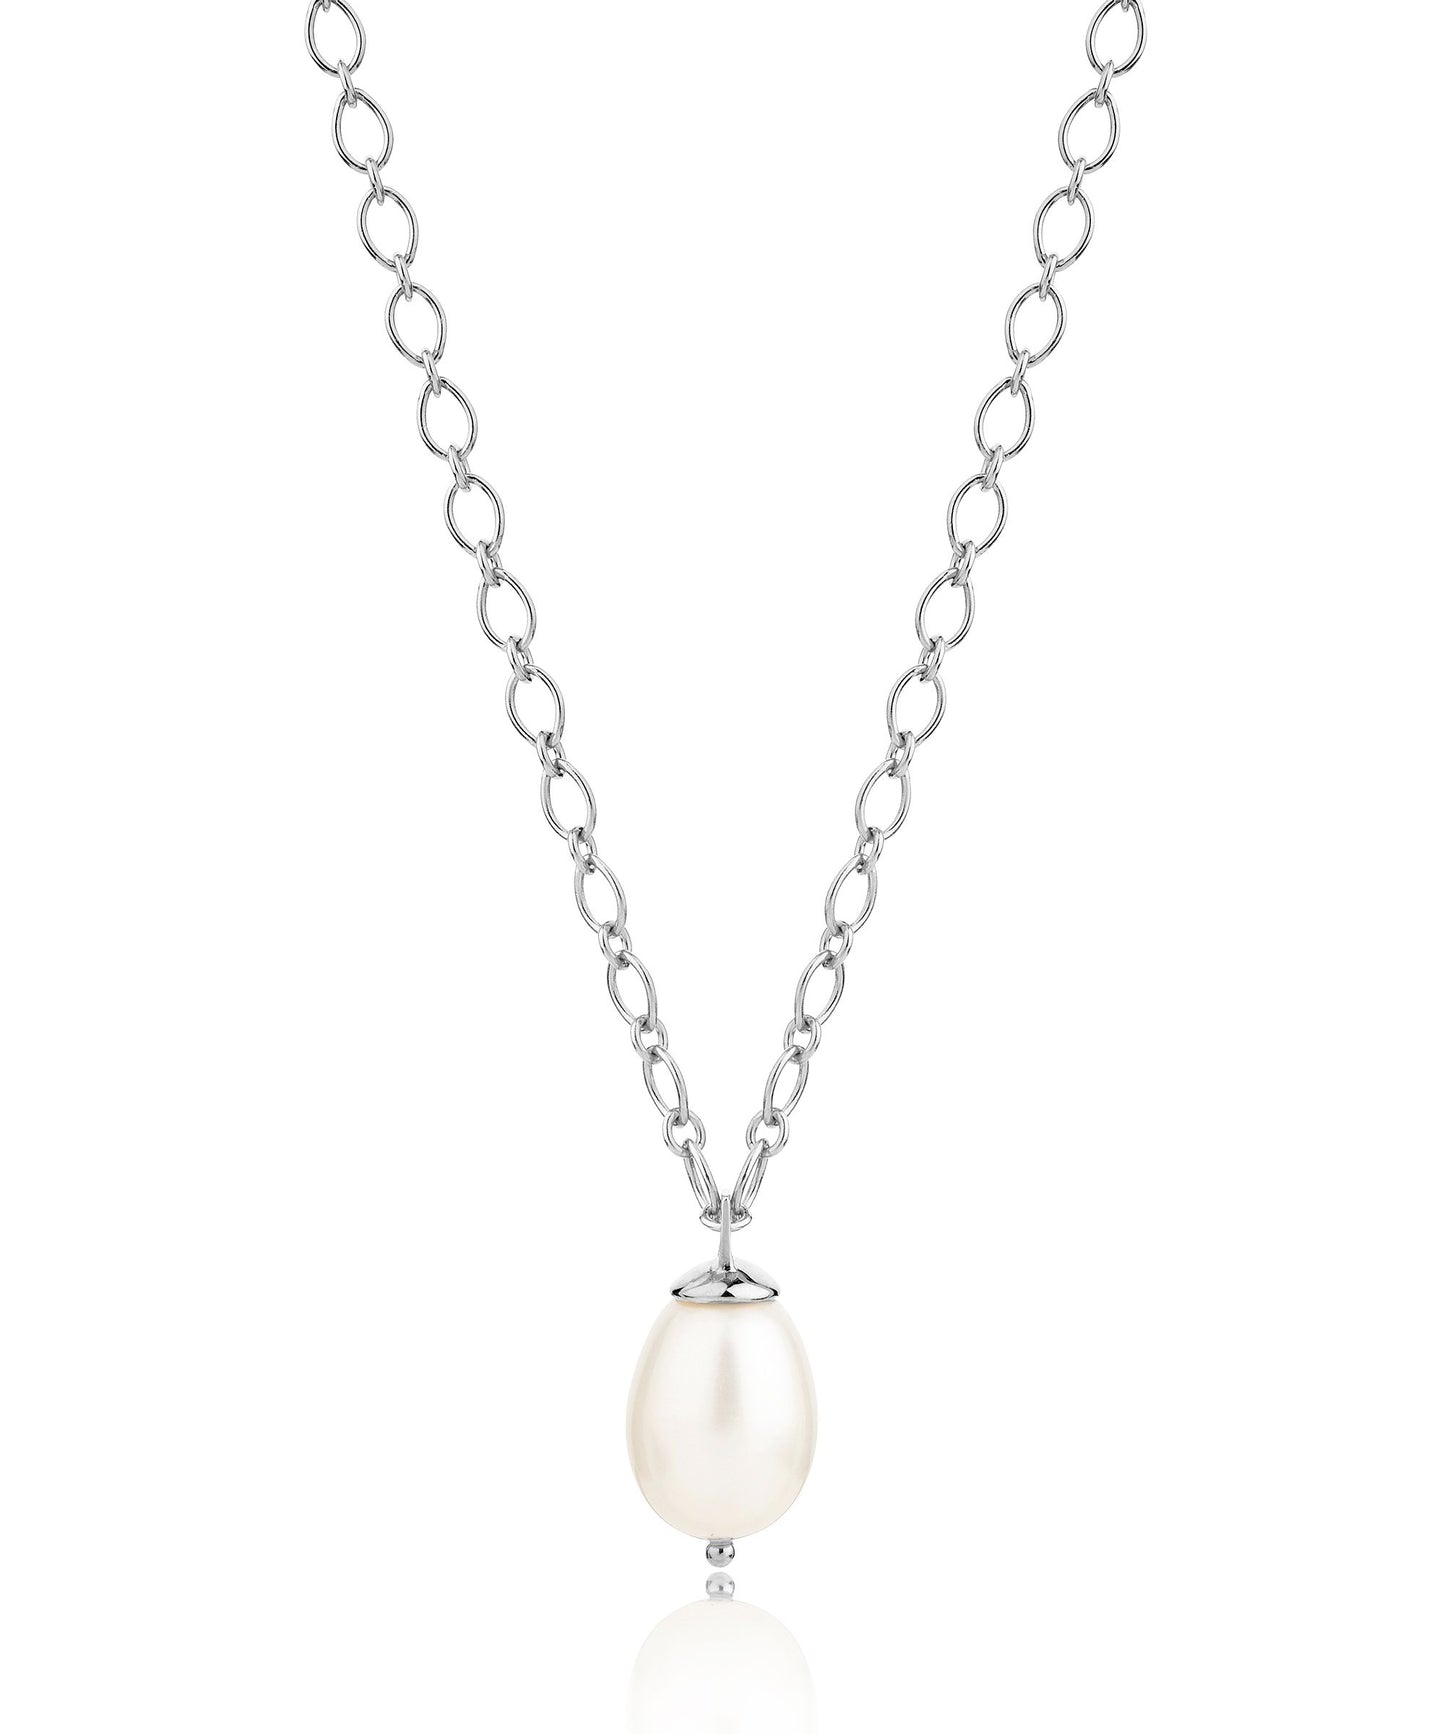 Luxury silver pearl drop necklace